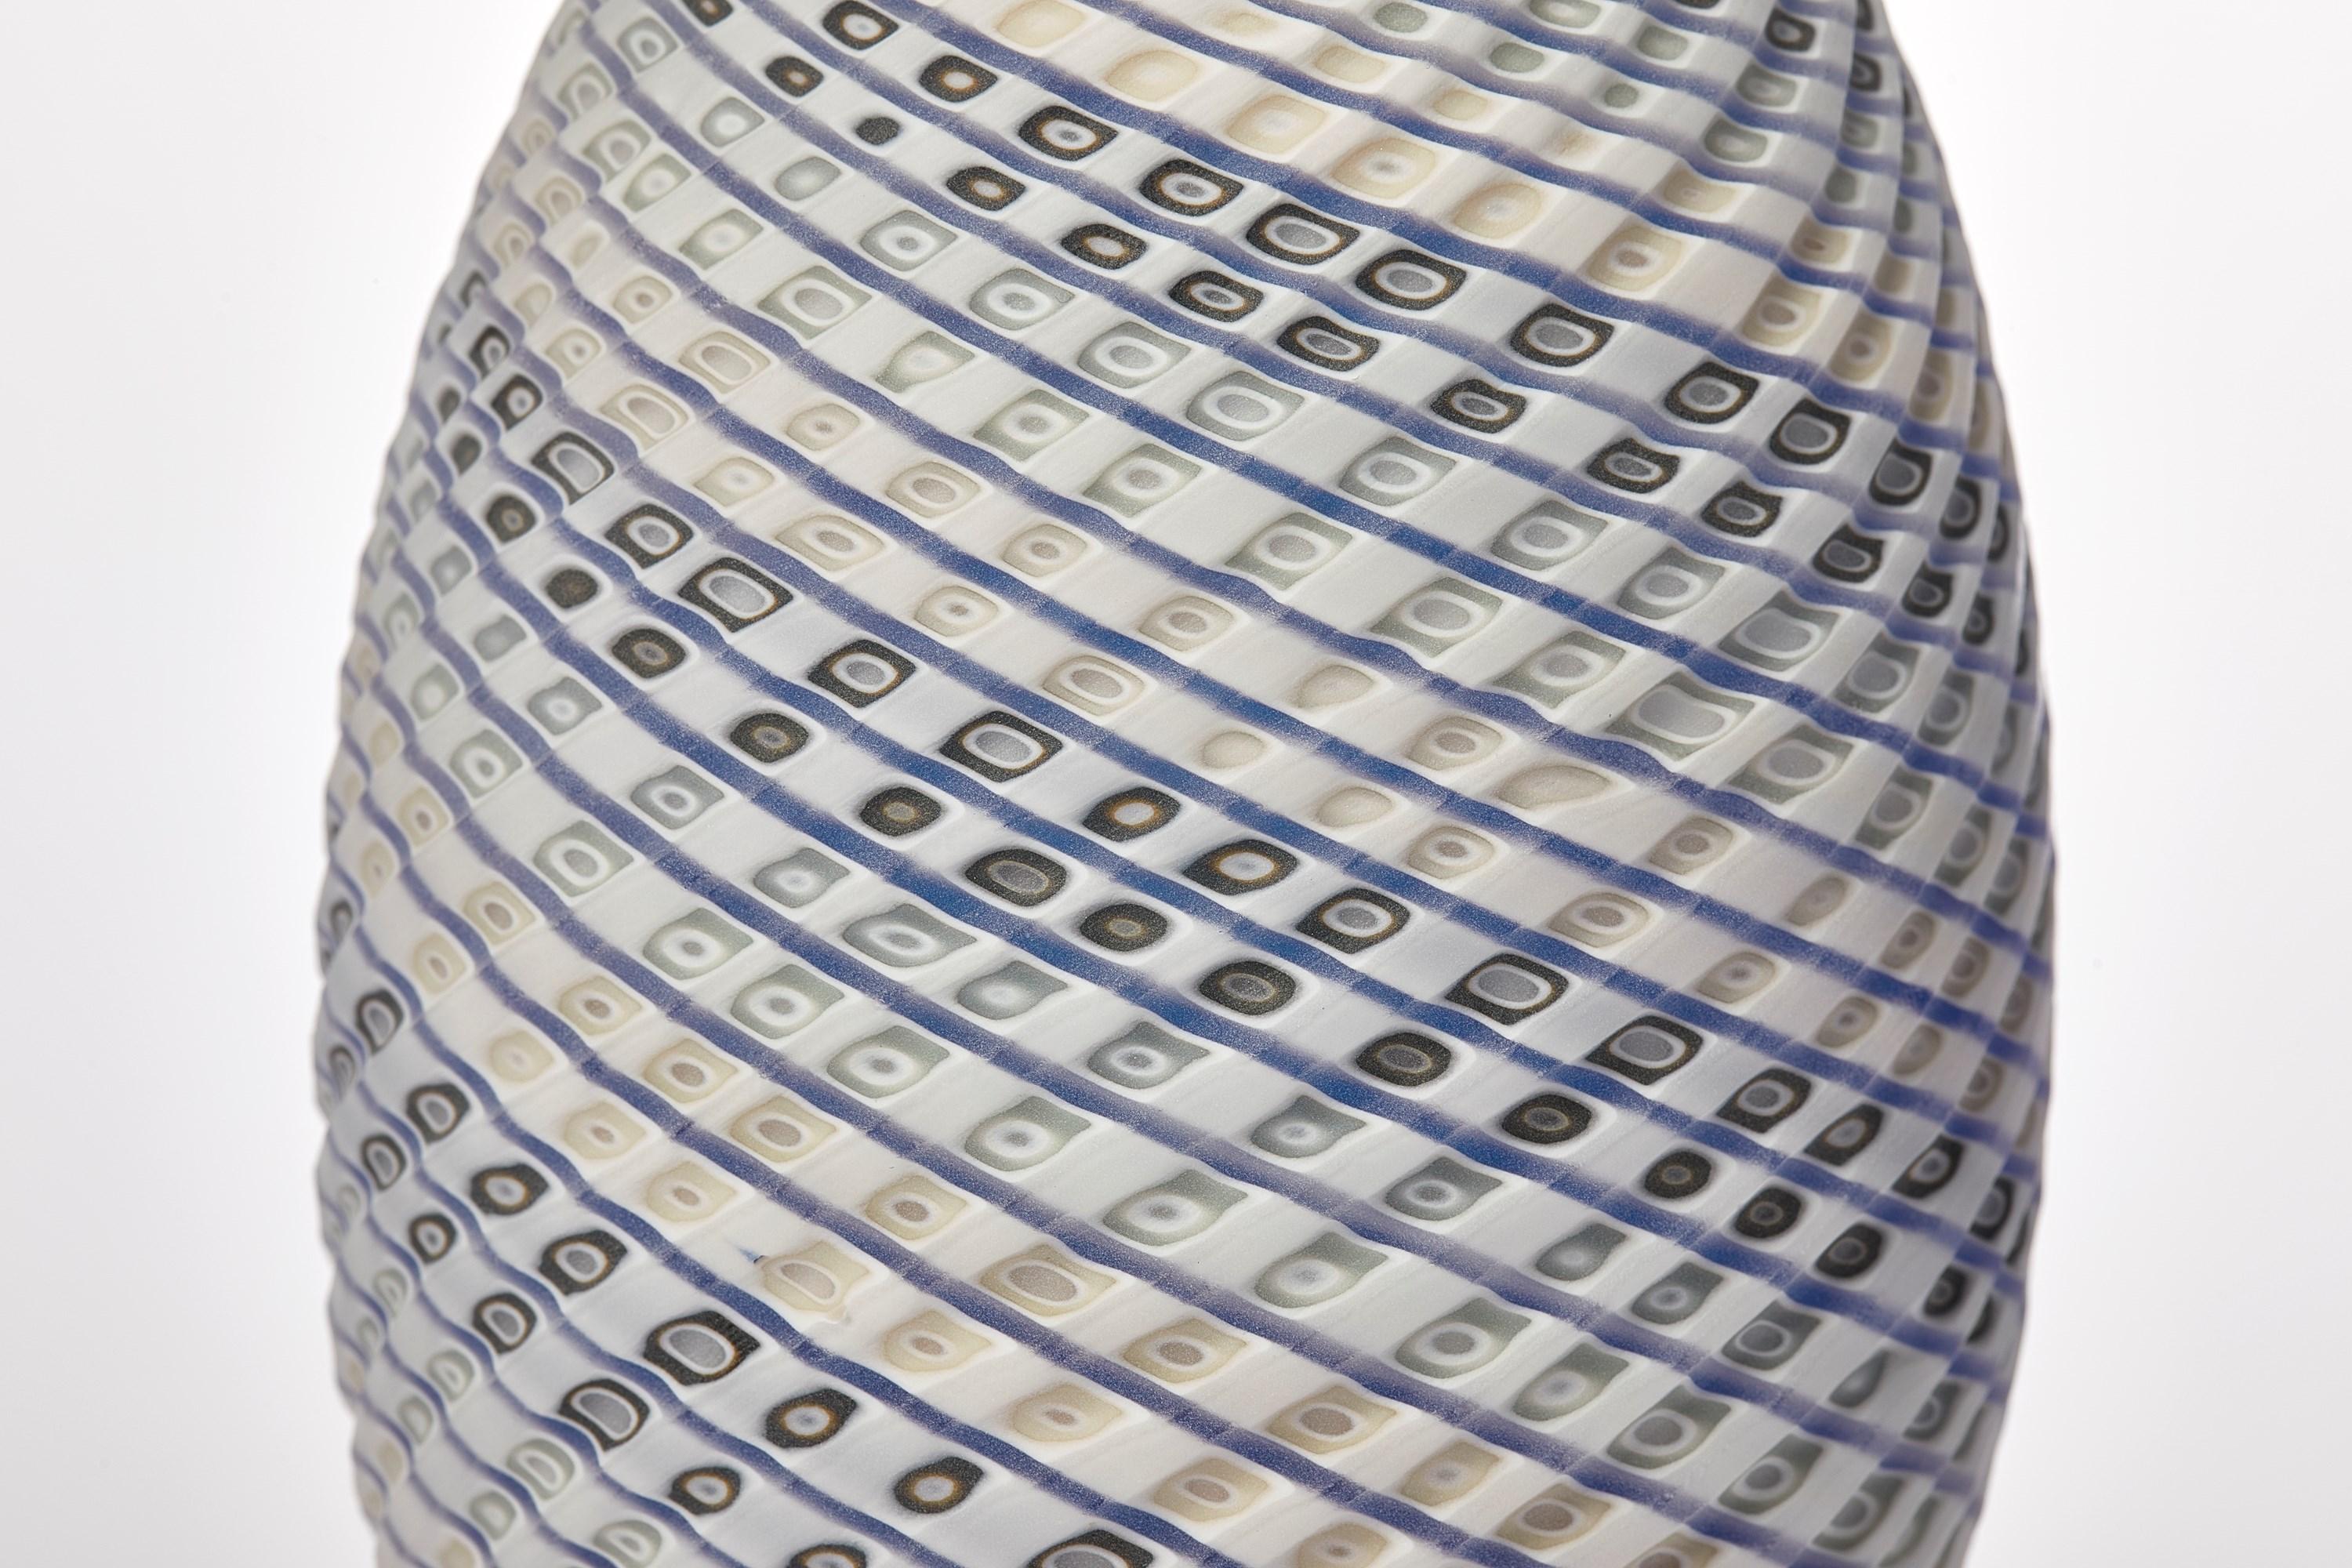 Organic Modern Woven Three Tone Blue Ovoid (sm), textured handblown glass vessel by Layne Rowe For Sale